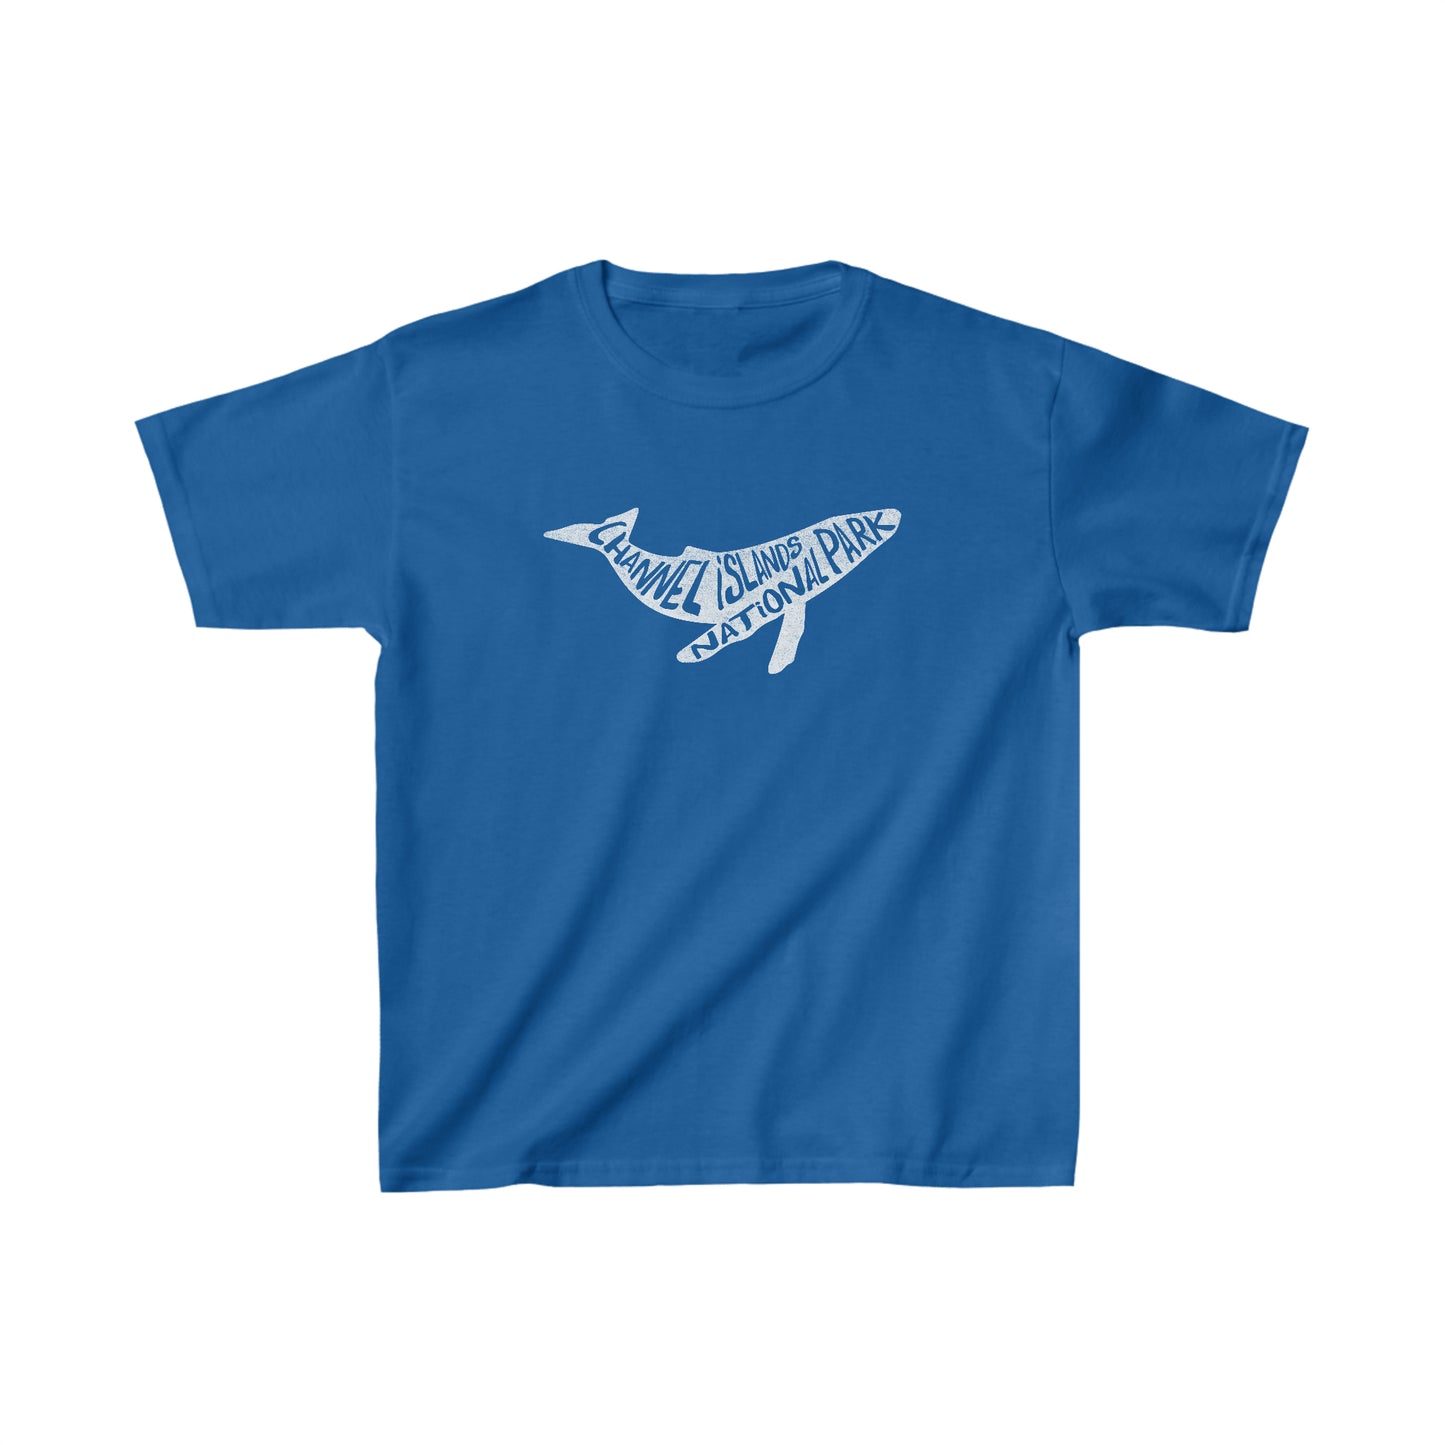 Channel Islands National Park Child T-Shirt - Humpback Whale